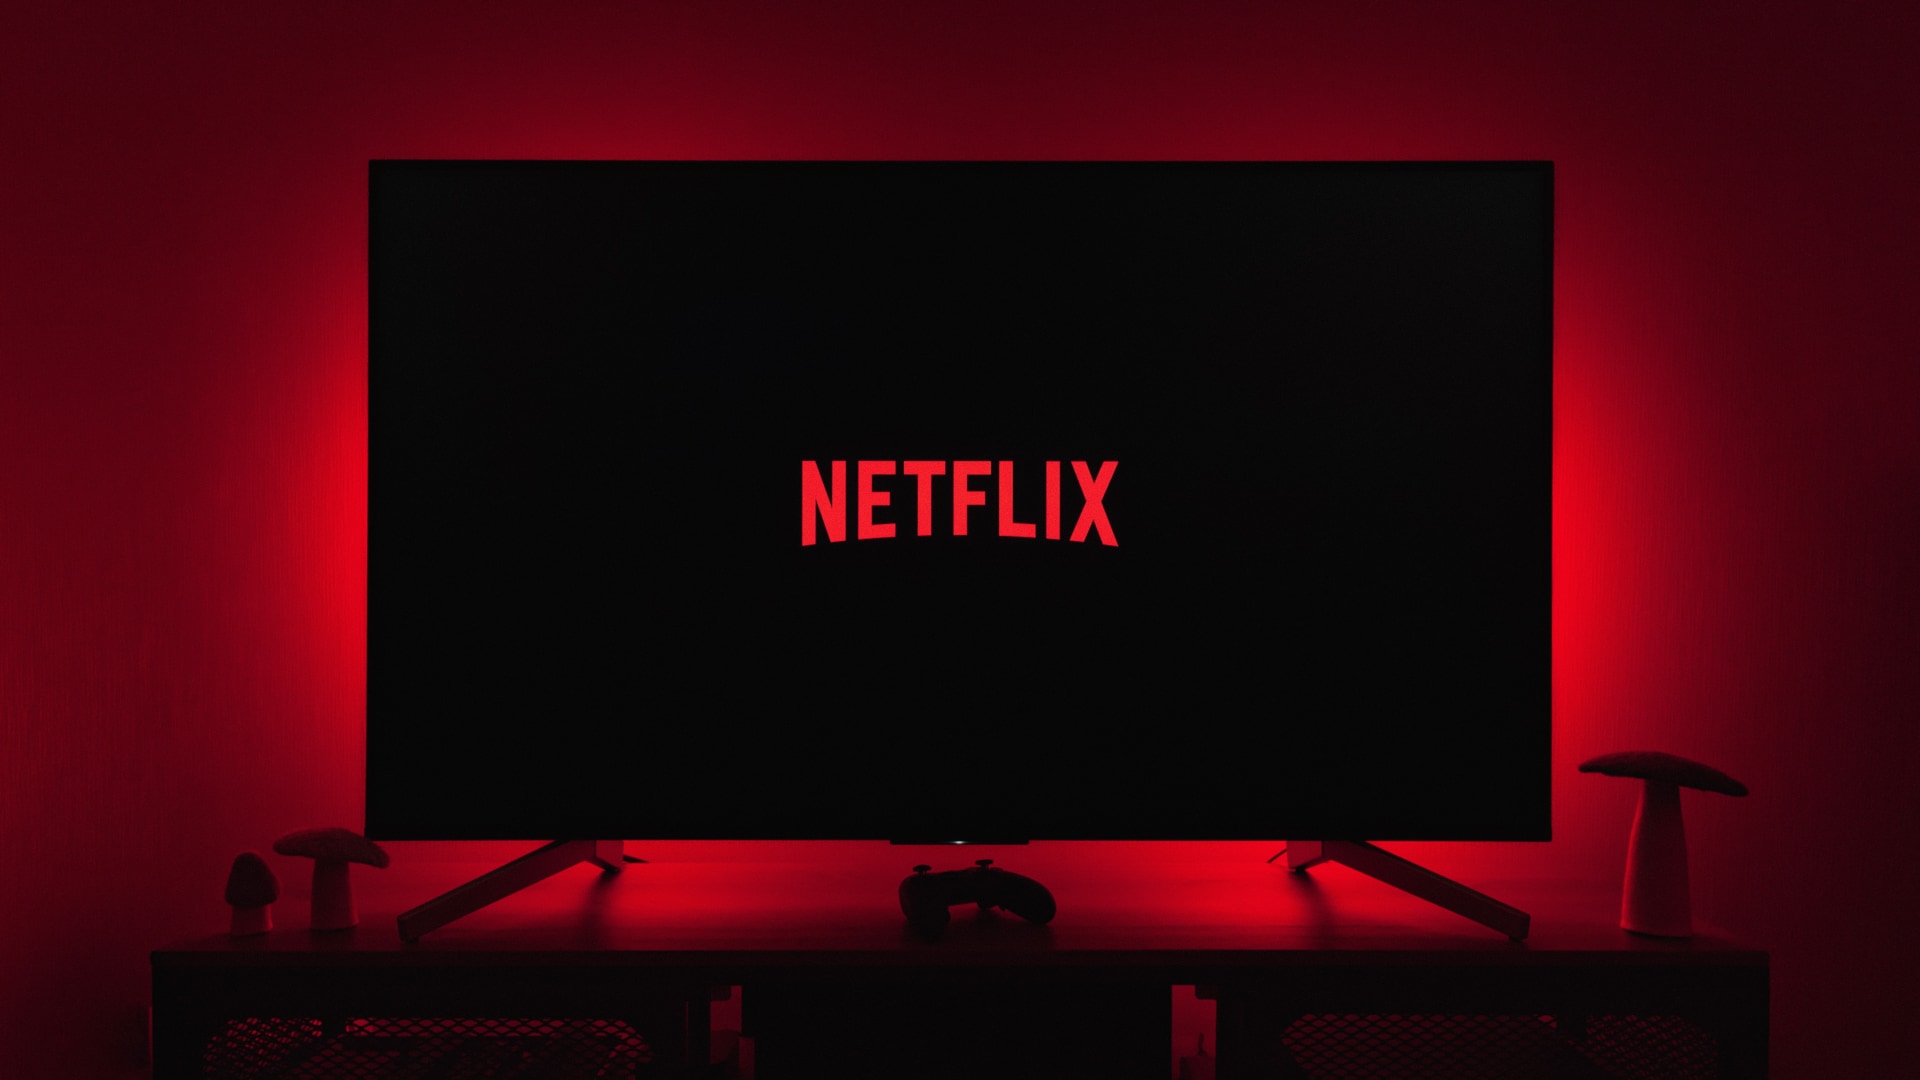 Netflix logo set against a black background, shown on a TV set